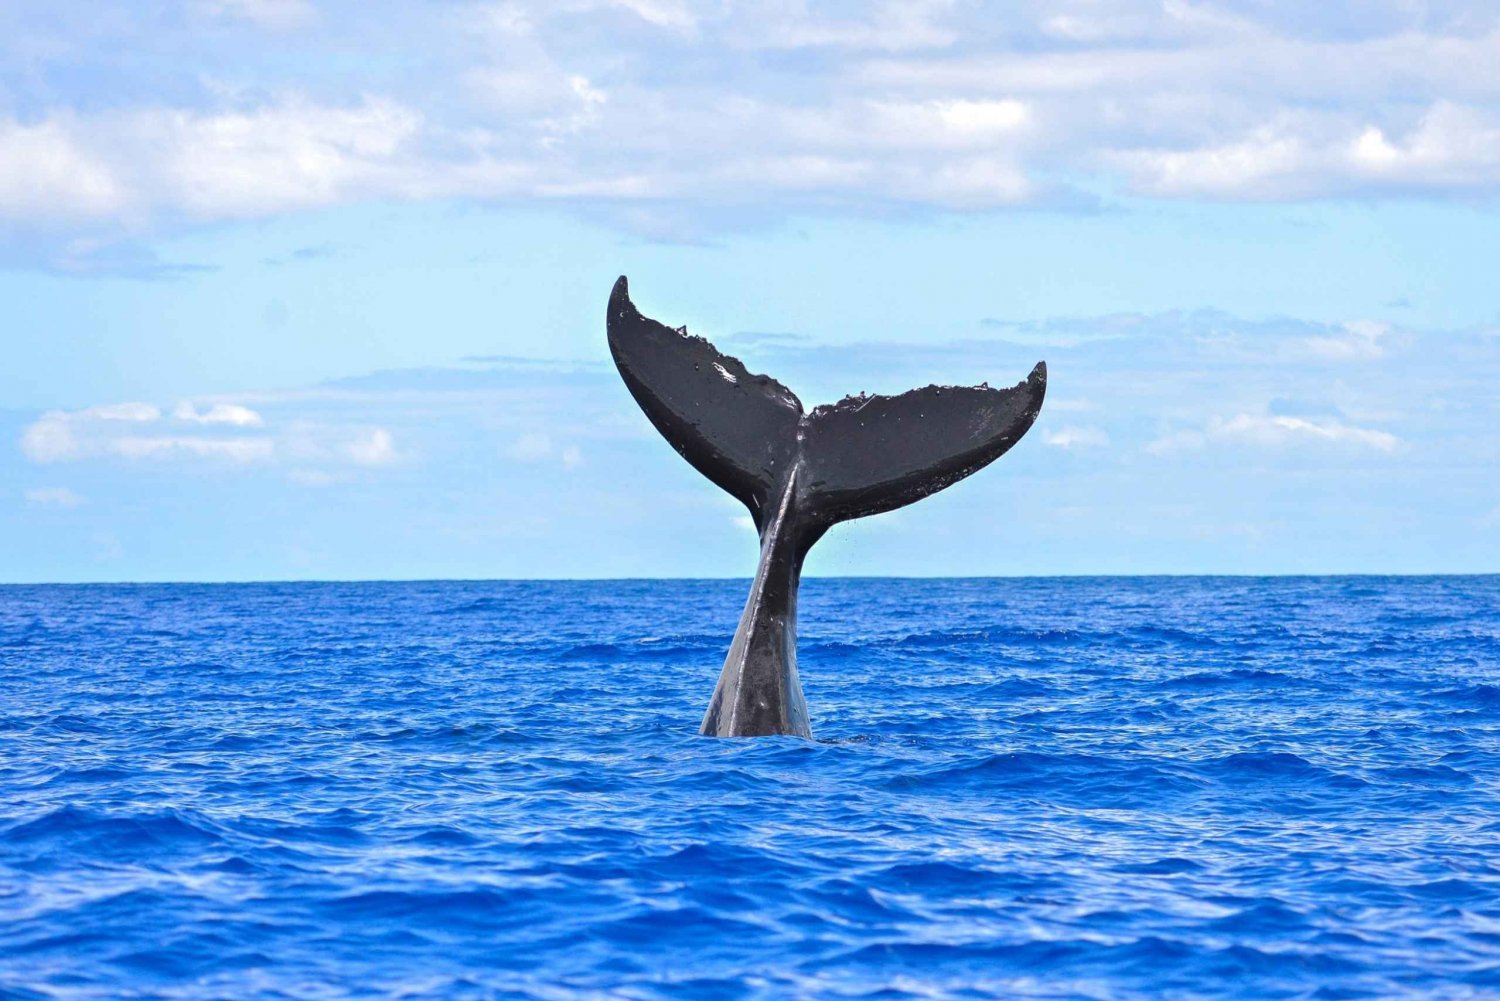 Sur de Maui: Tour de avistamiento de ballenas a bordo del Calypso